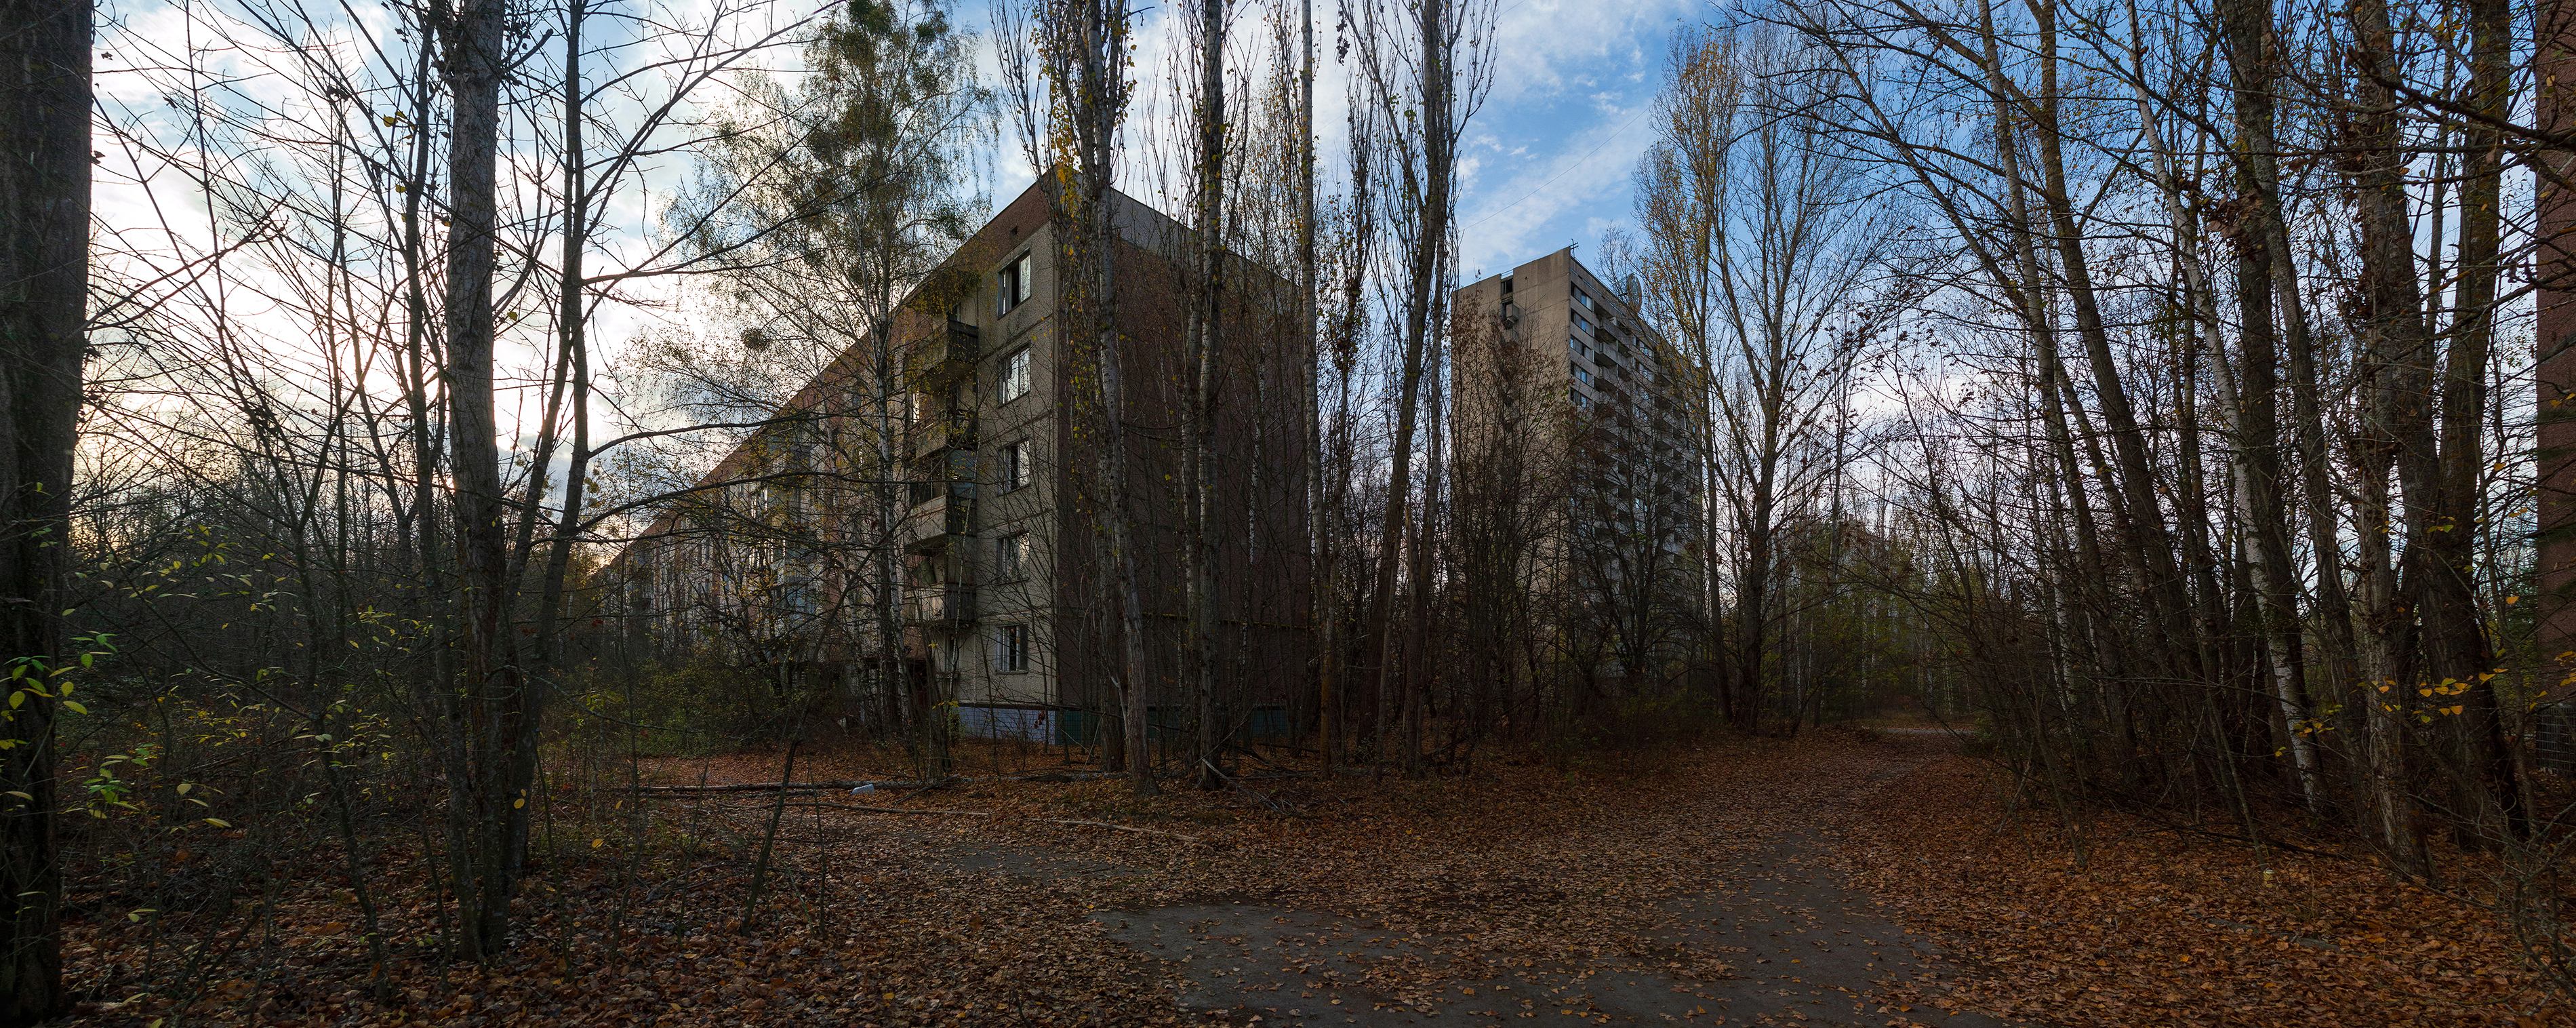 General 3800x1516 Pripyat Chernobyl landscape block of flats fallen leaves trees Ukraine